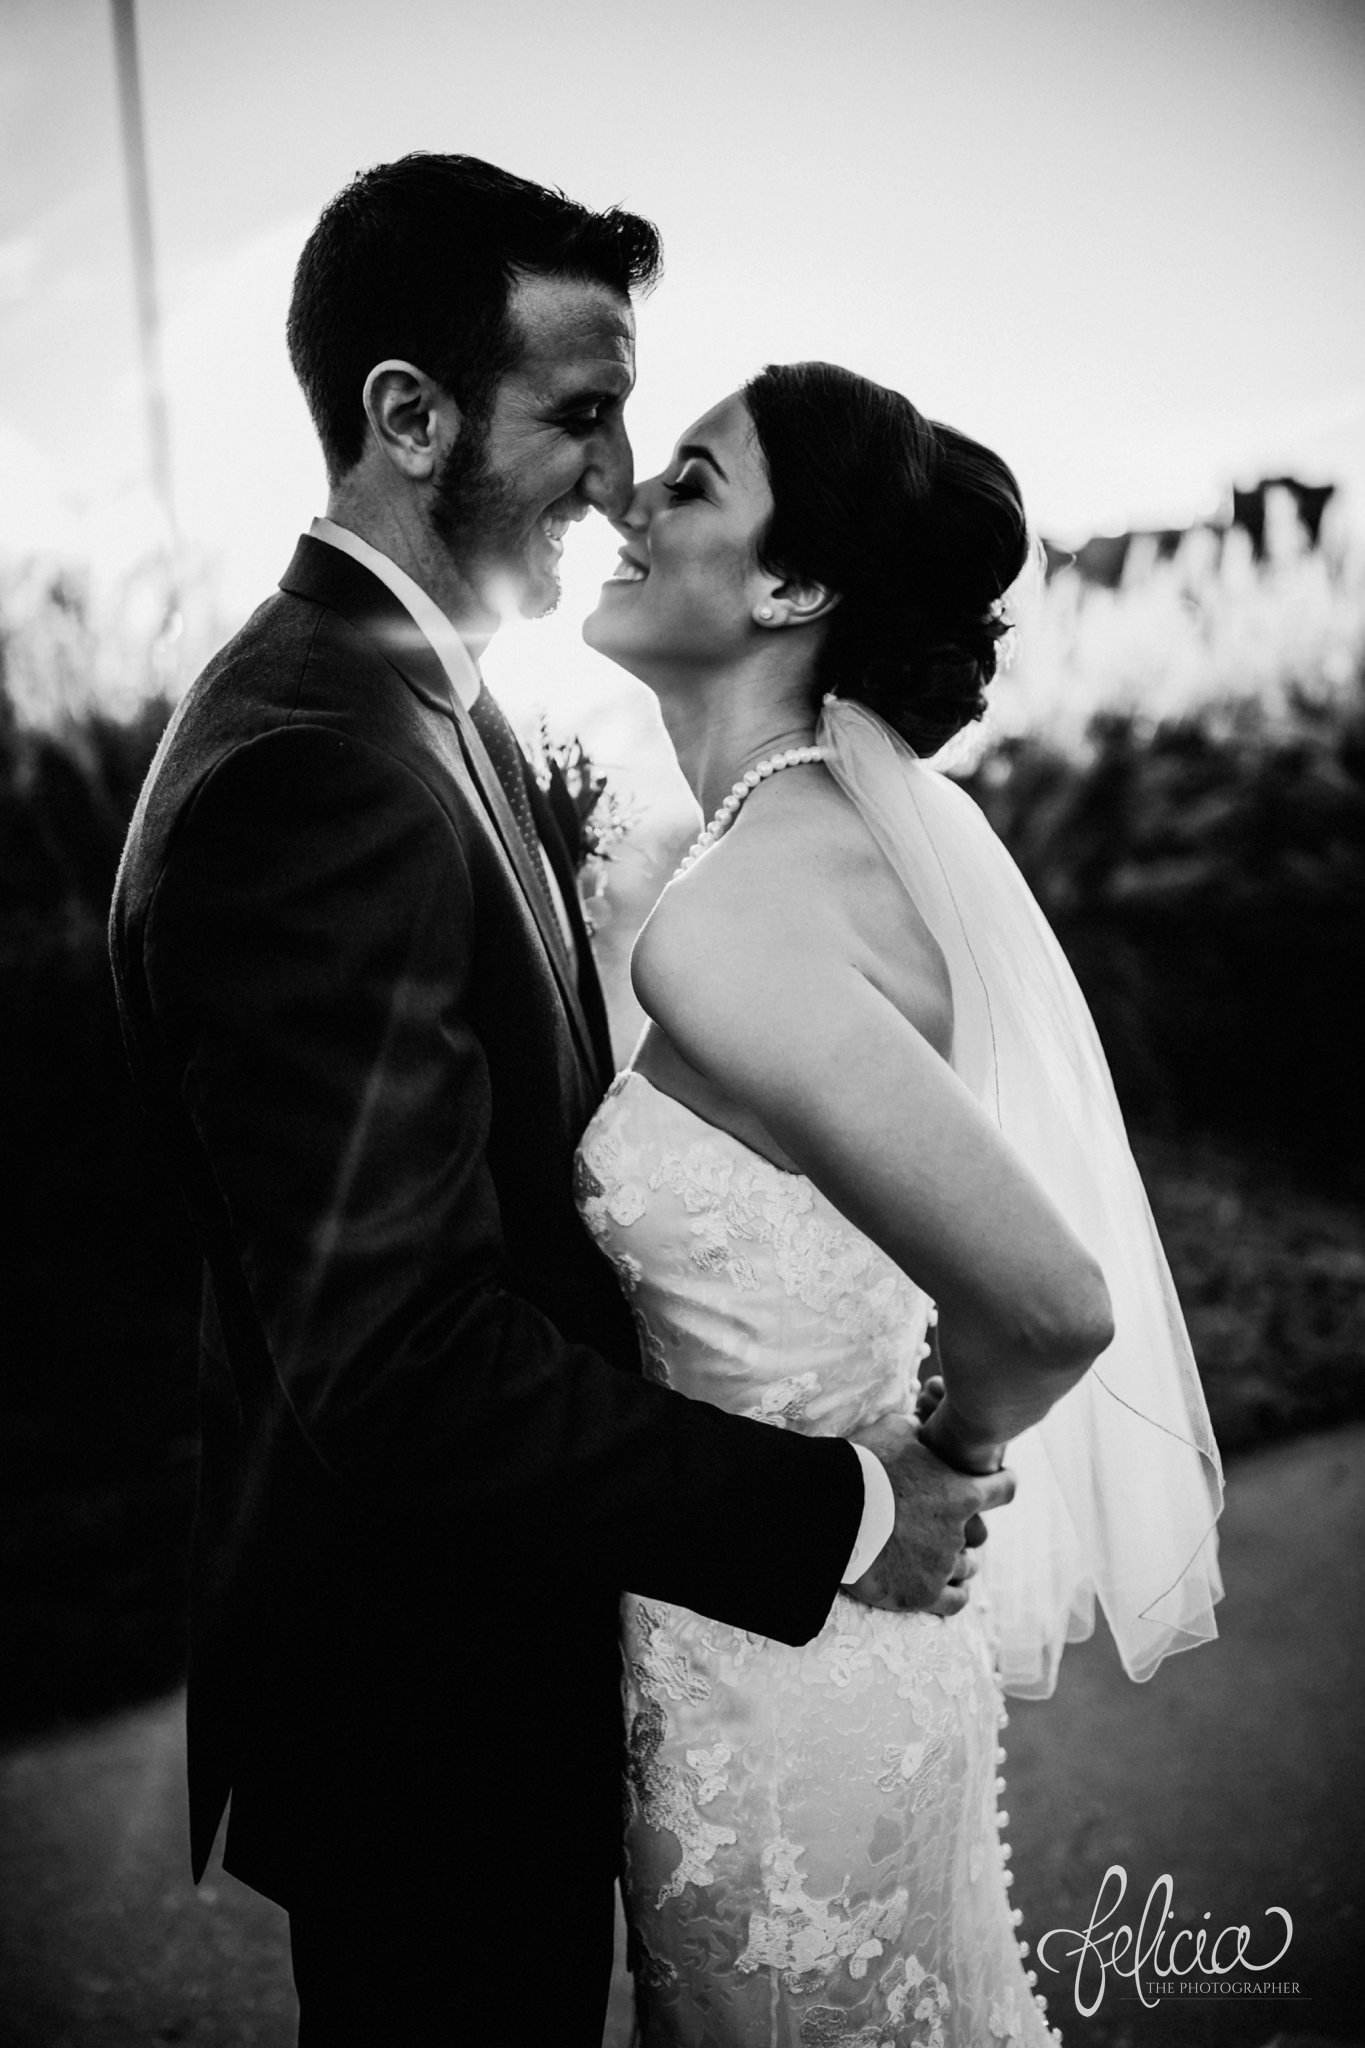 images by feliciathephotographer.com | wedding photographer | kansas city | portrait | bride and groom | pearls | kiss | joy | smokey eye | black and white |